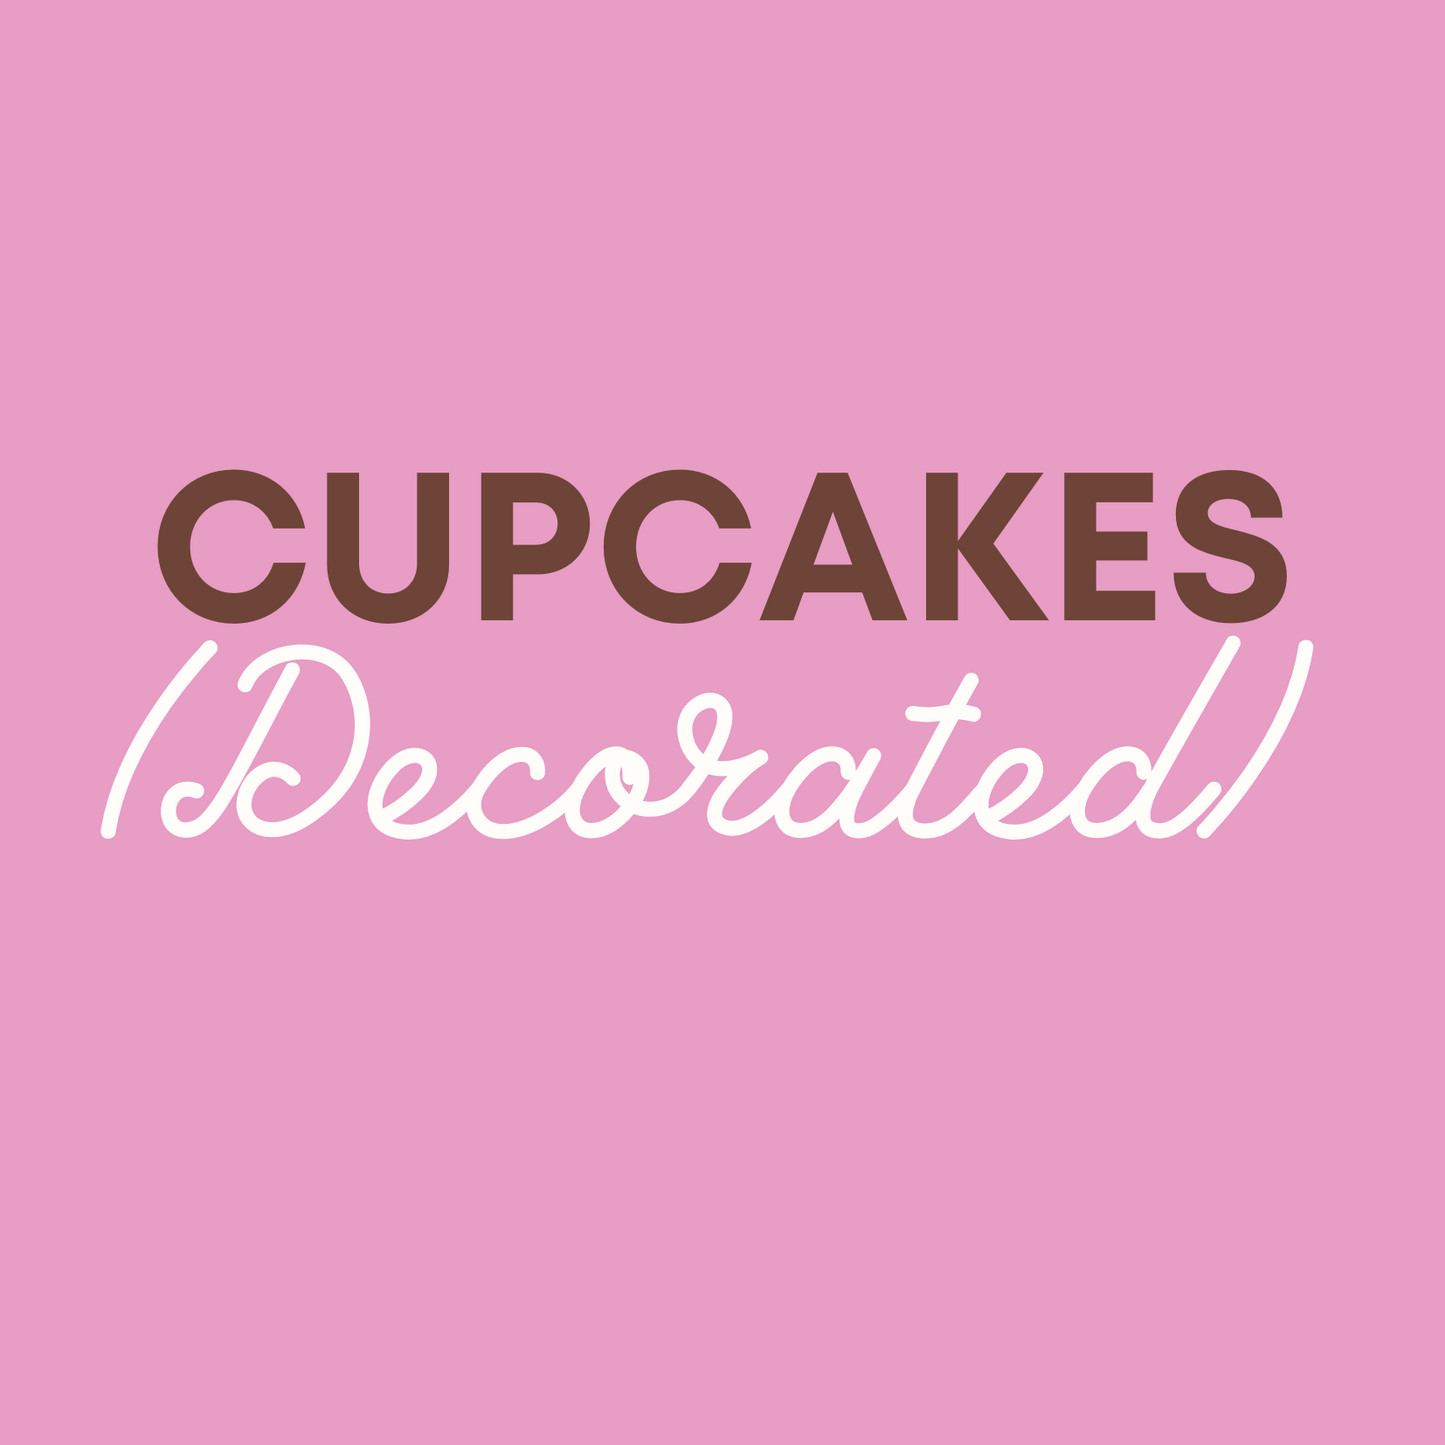 Cupcakes (Decorated)